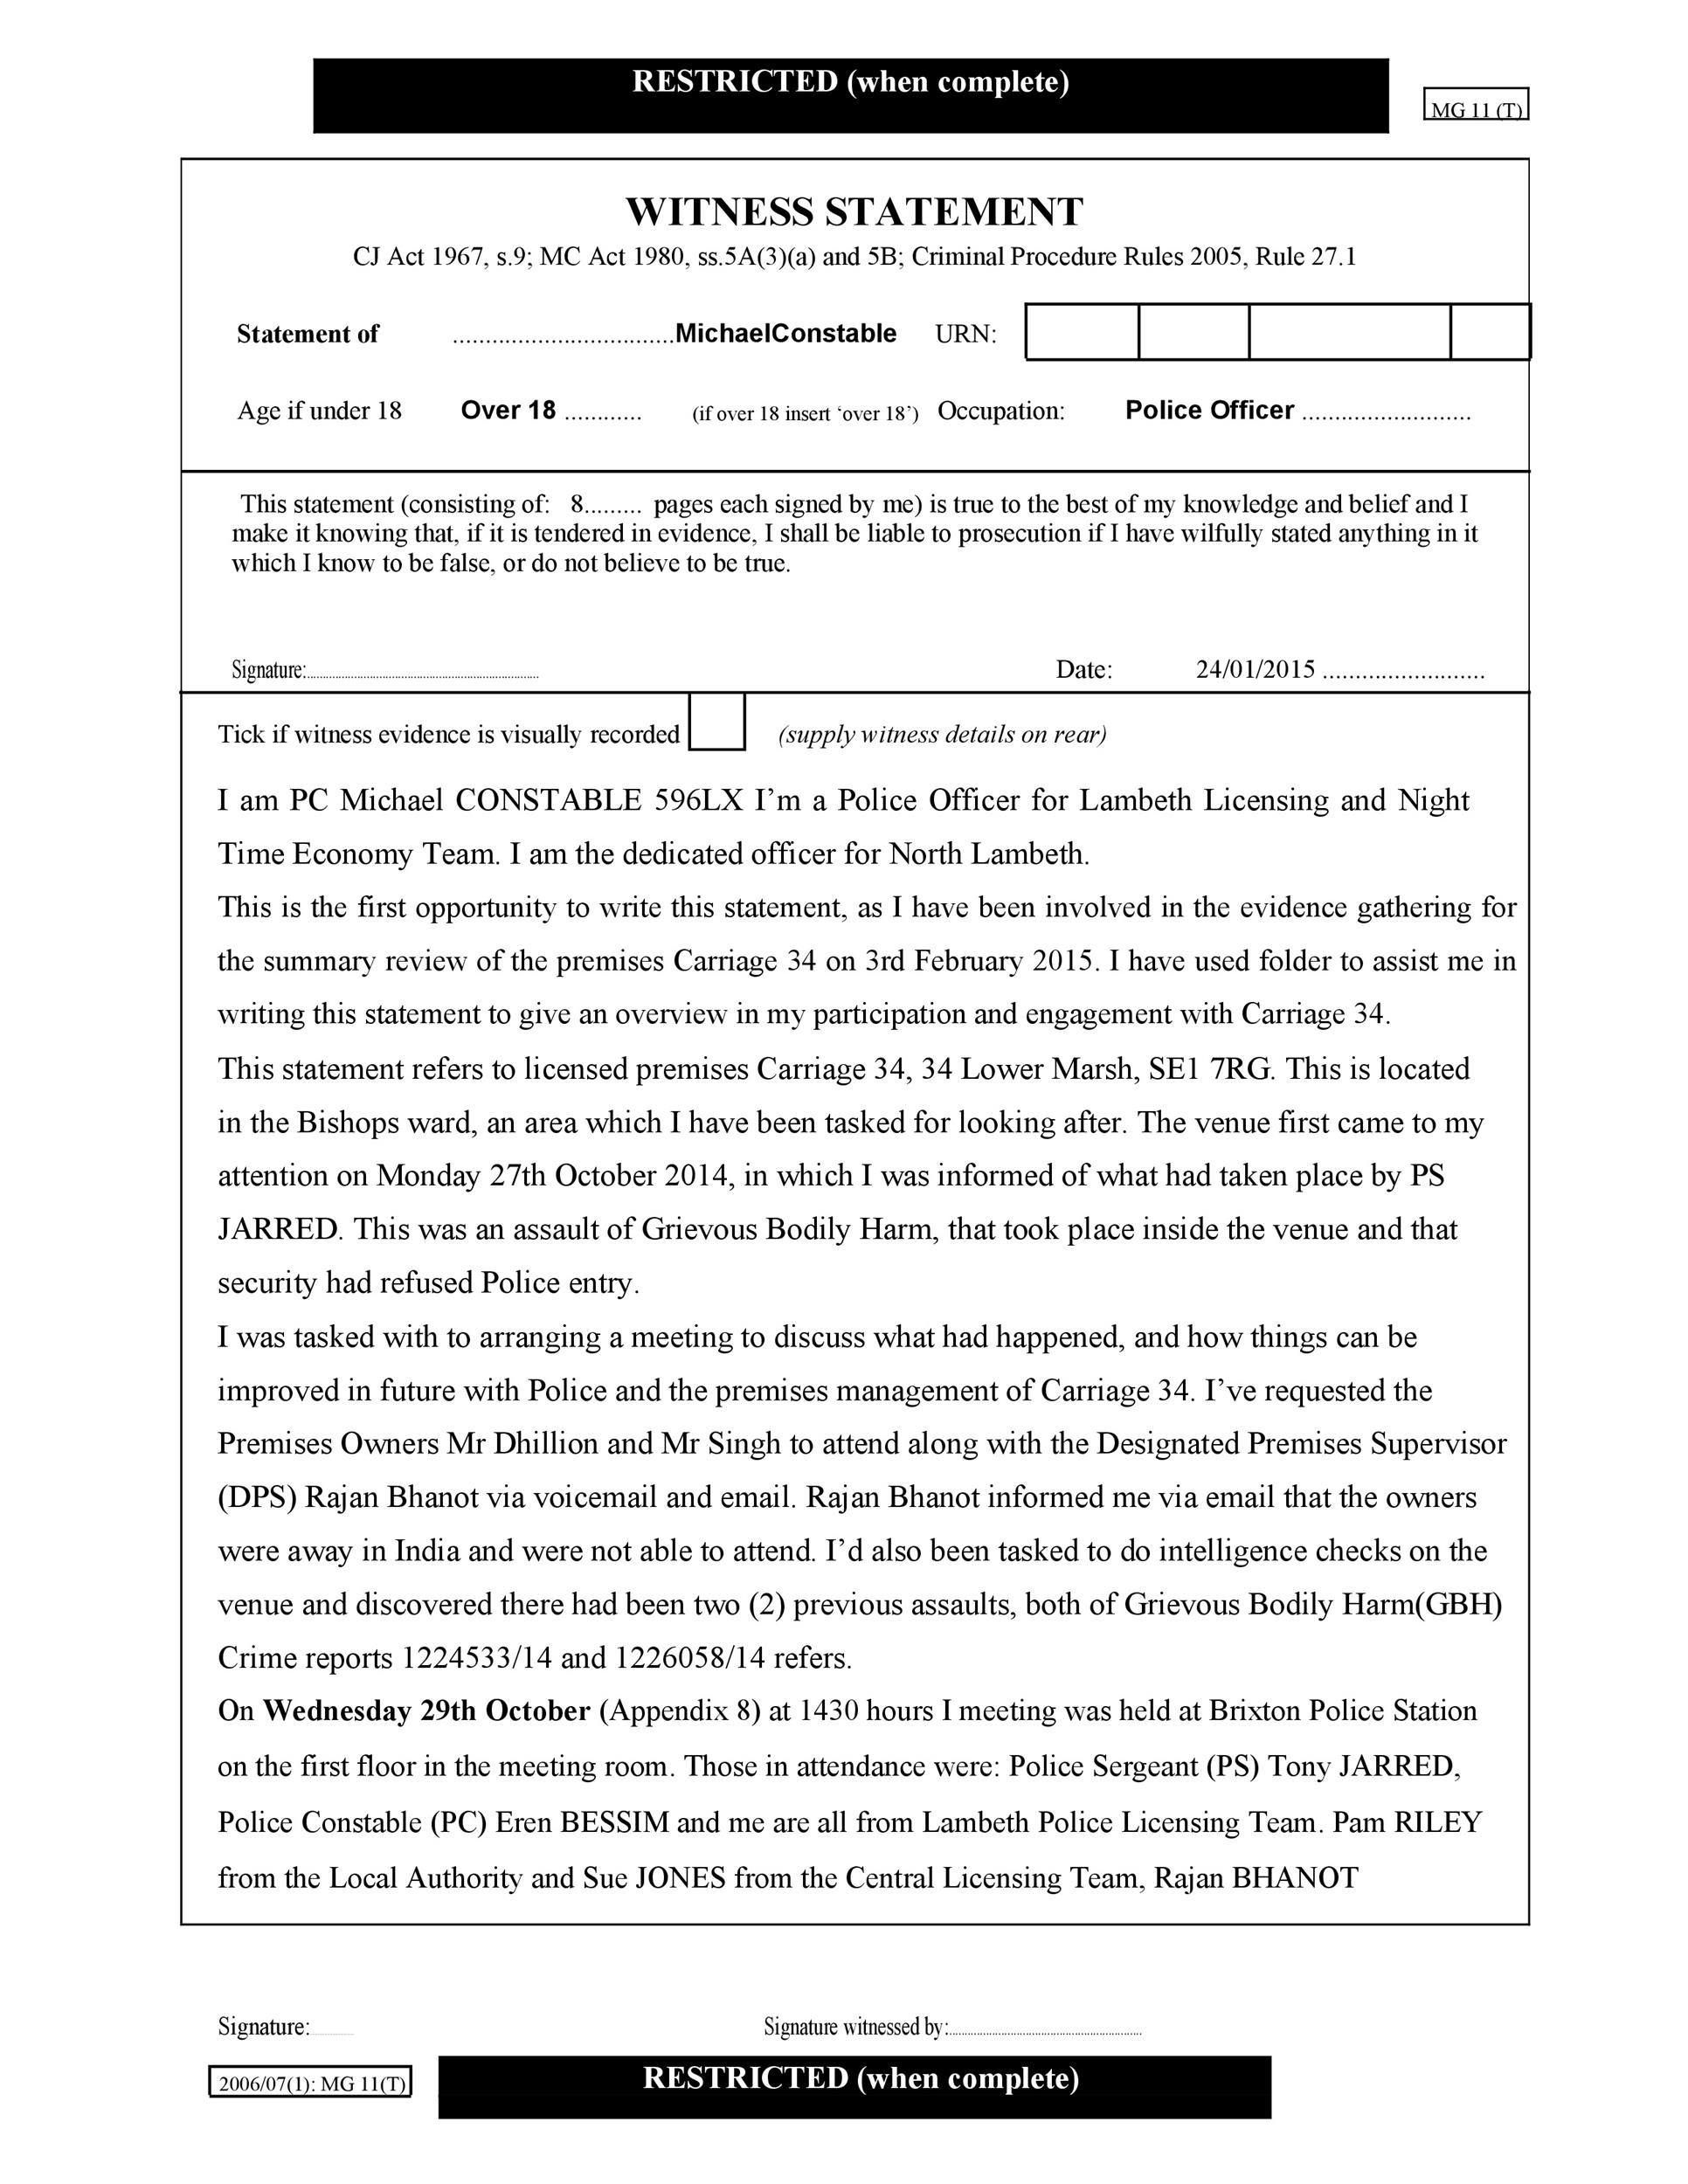 Free witness statement form 02